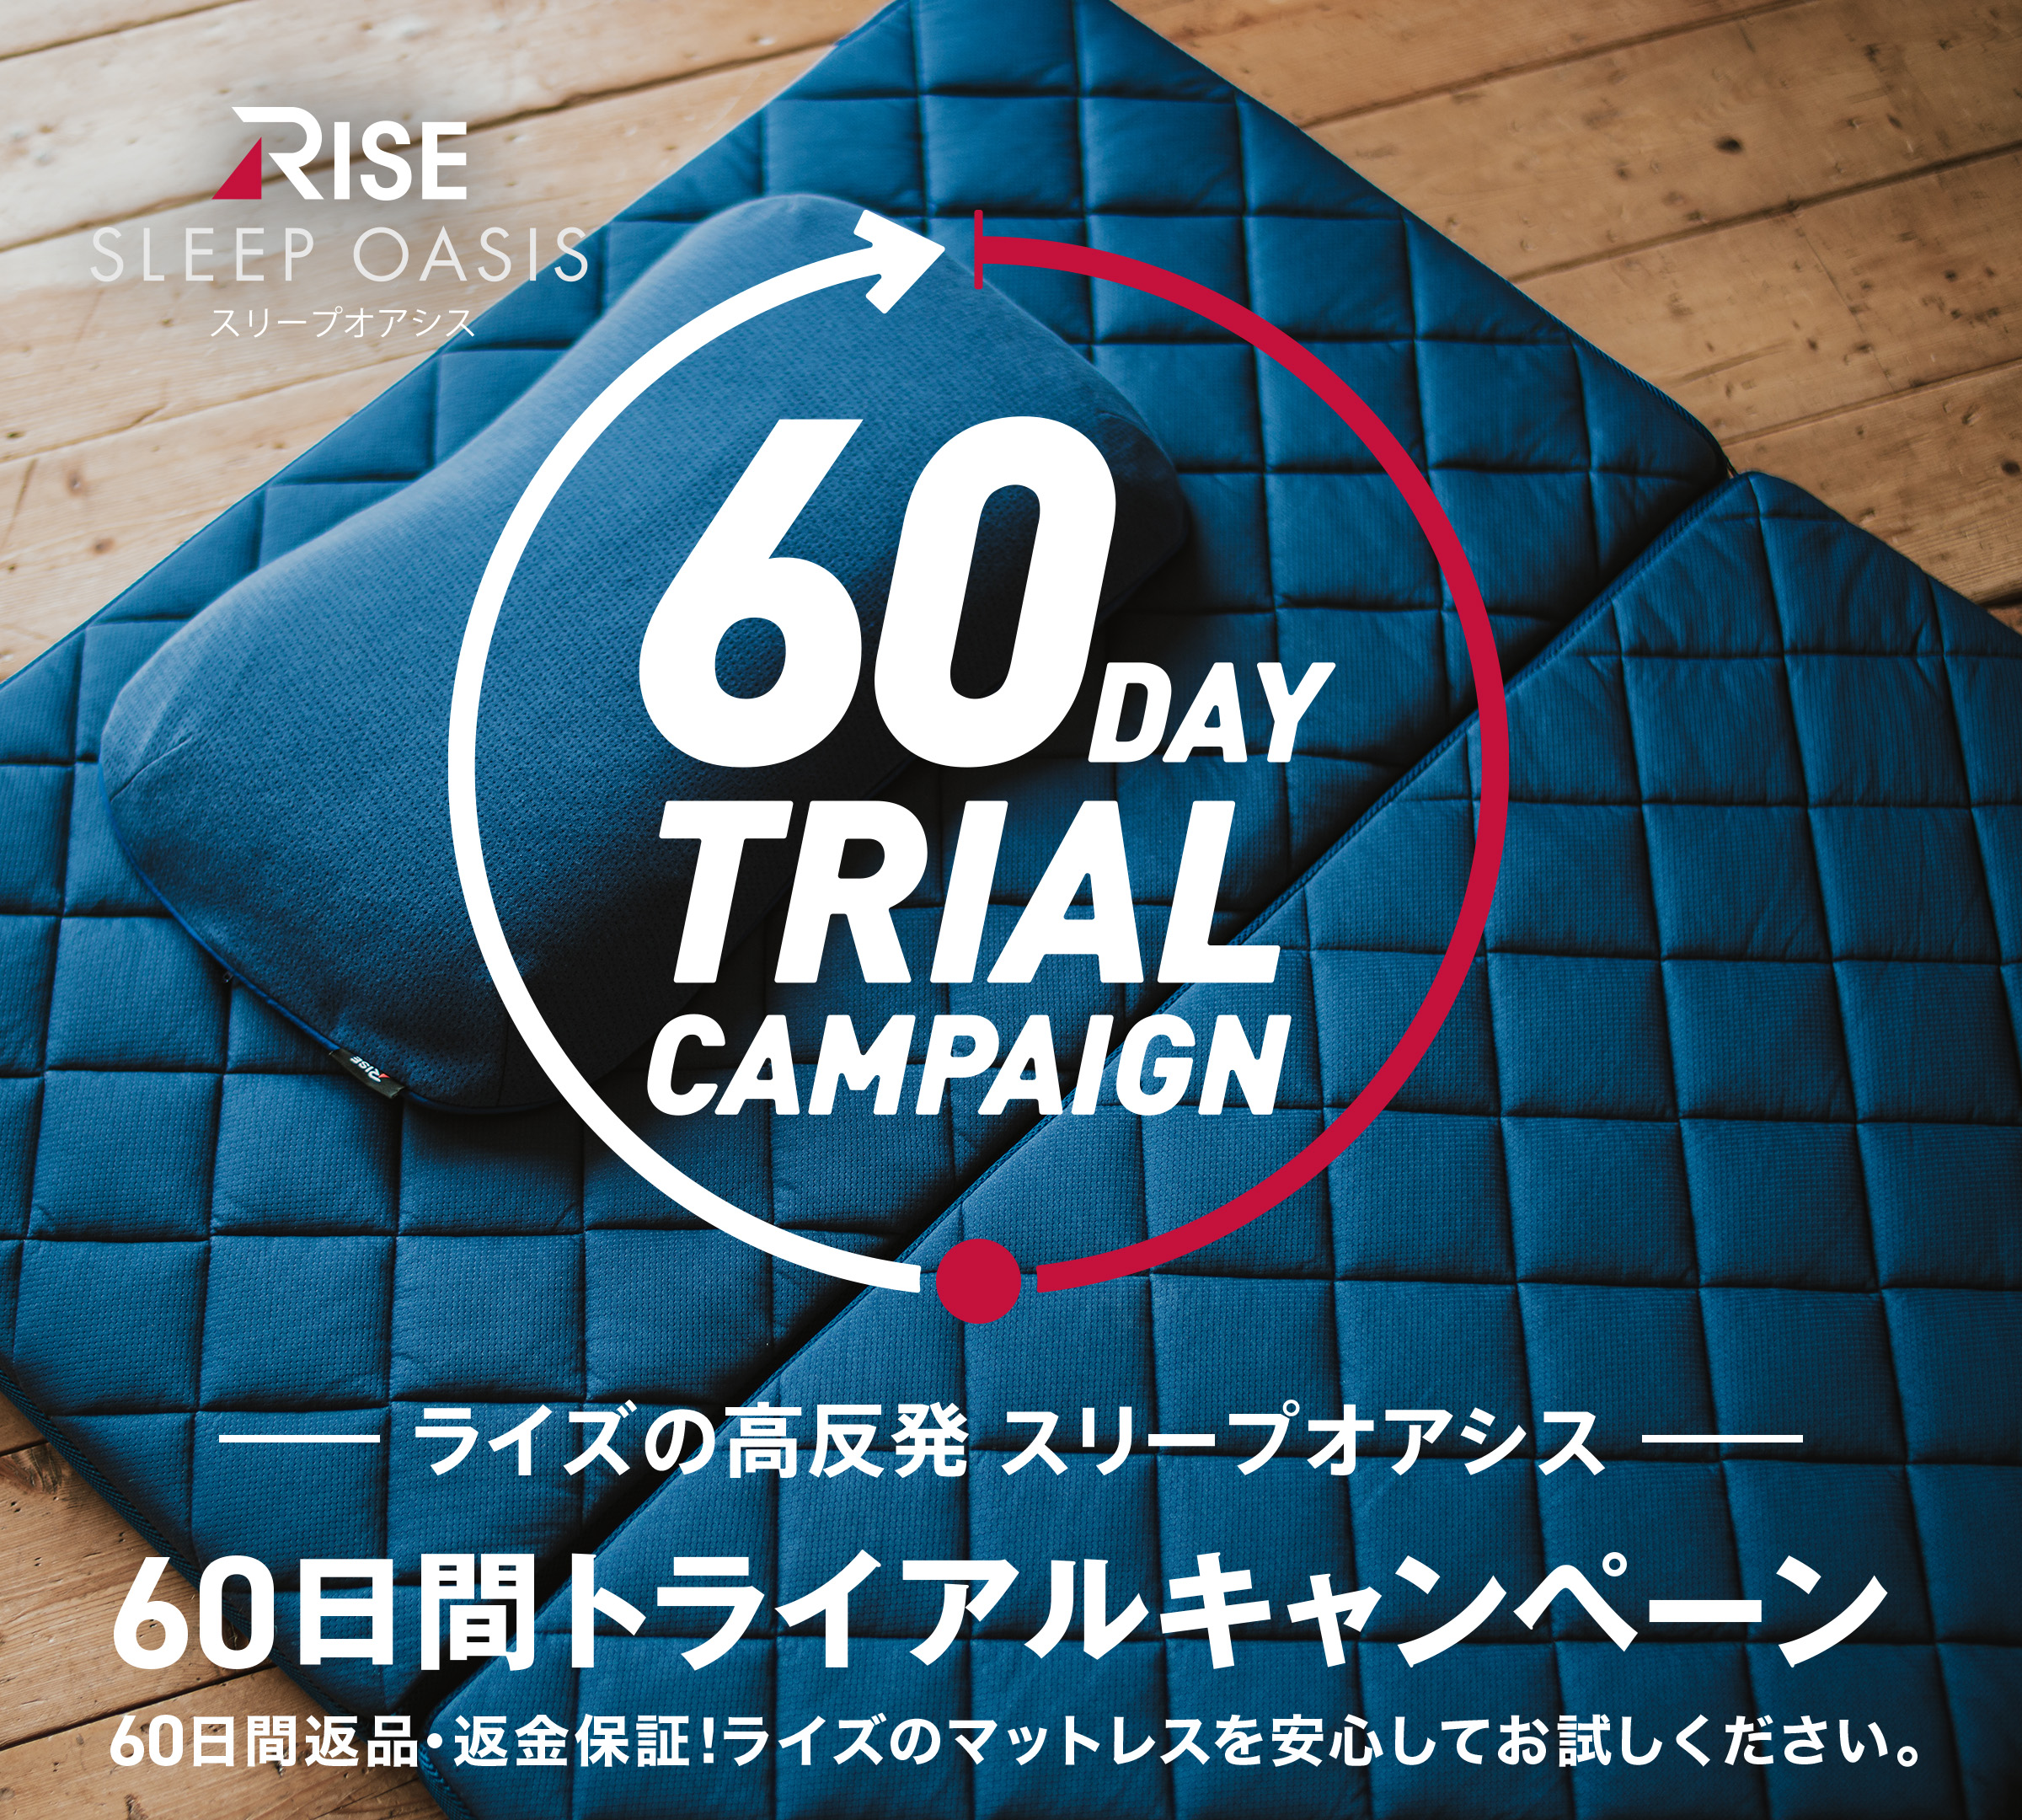 RISE SLEEP OASIS スリーブアオシス 60日間トライアルキャンペーン